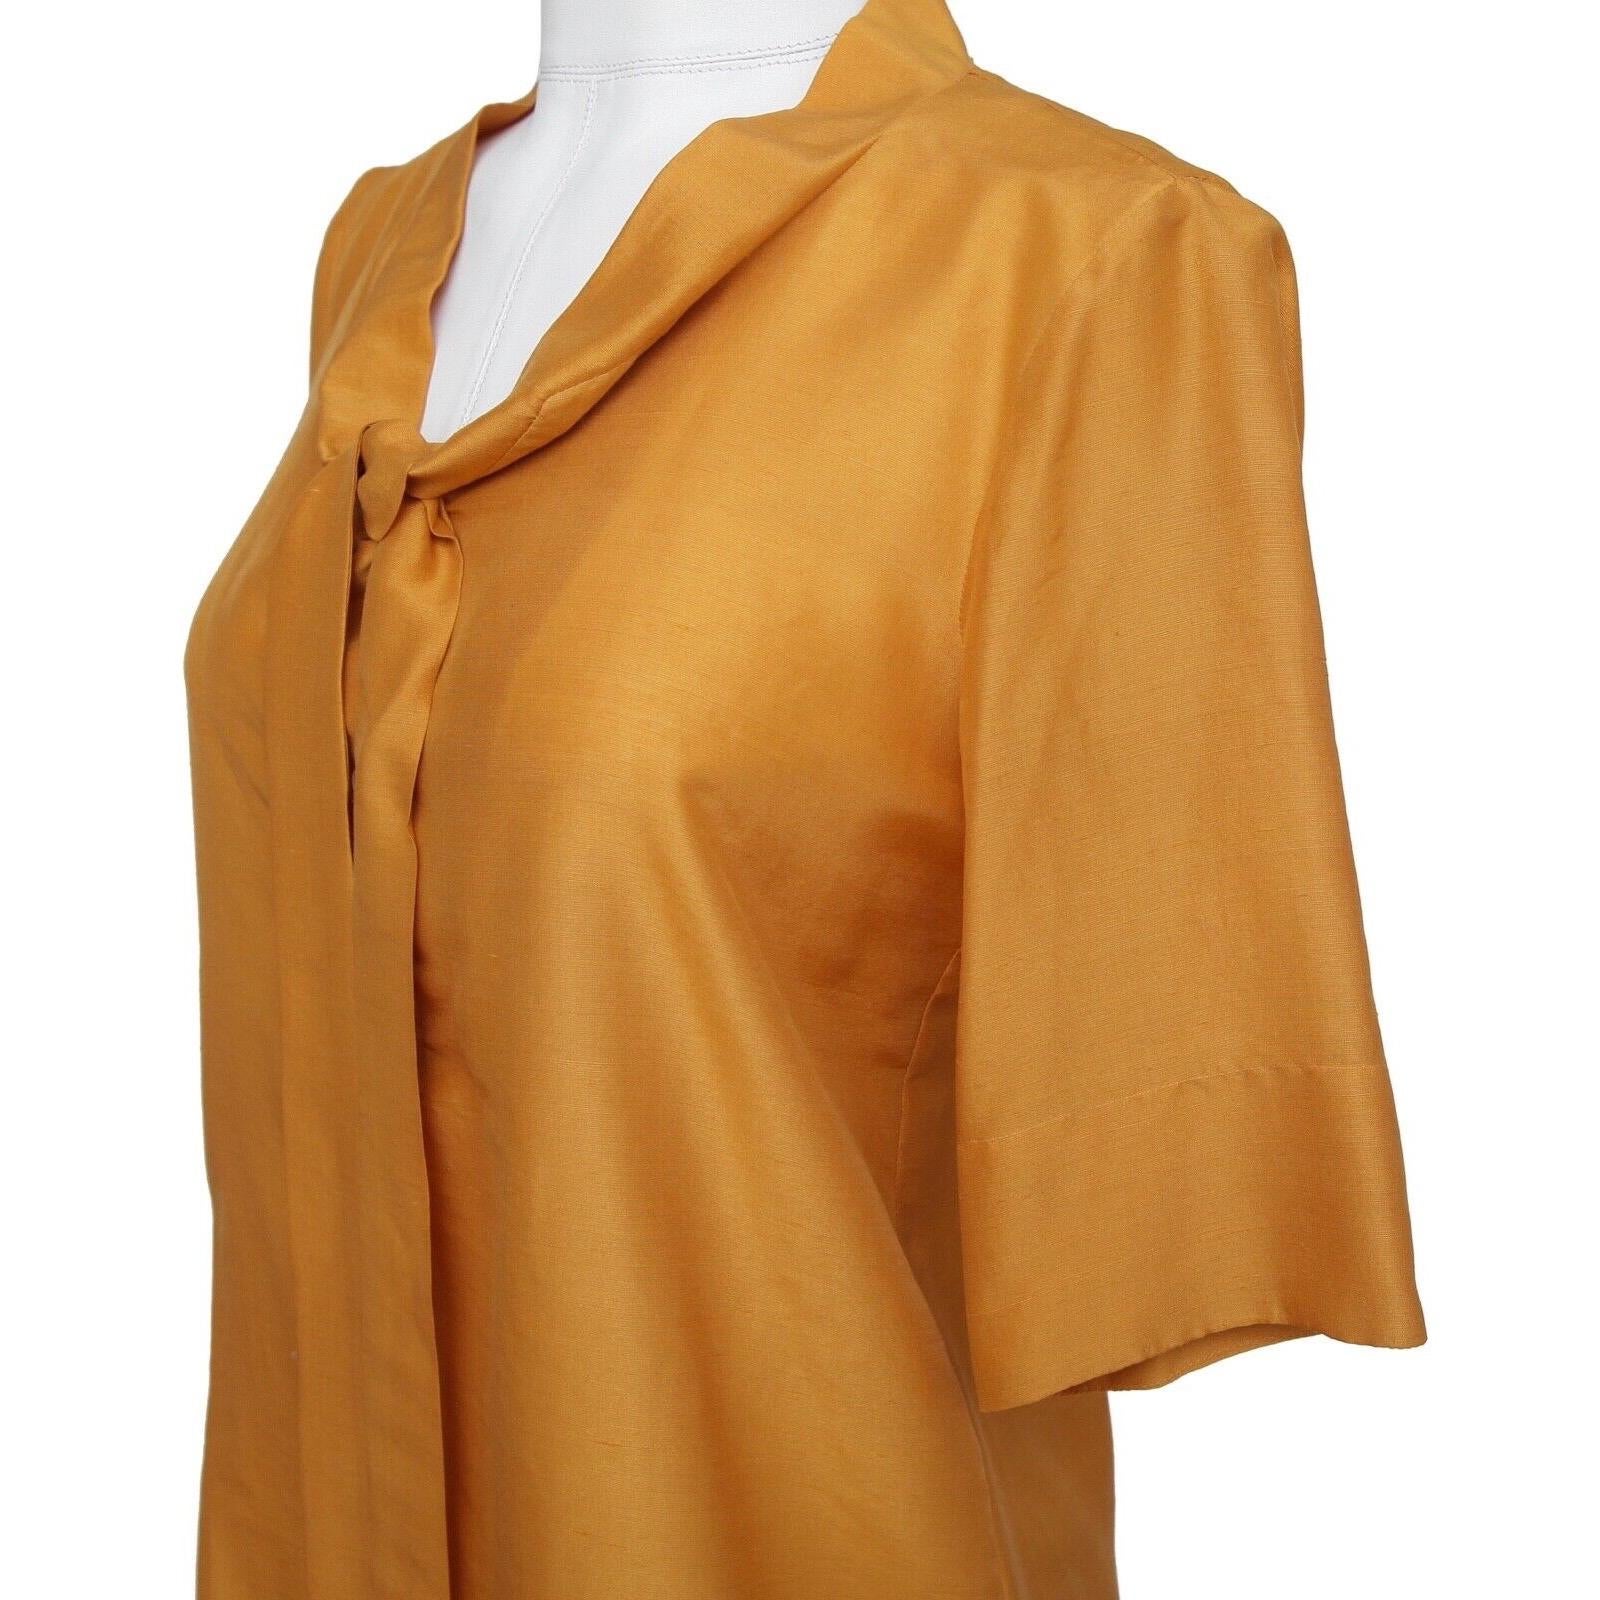 CHLOE Blouse Shirt Marigold Yellow Orange Silk Short Sleeve Sz 36 Fall 2007 For Sale 2